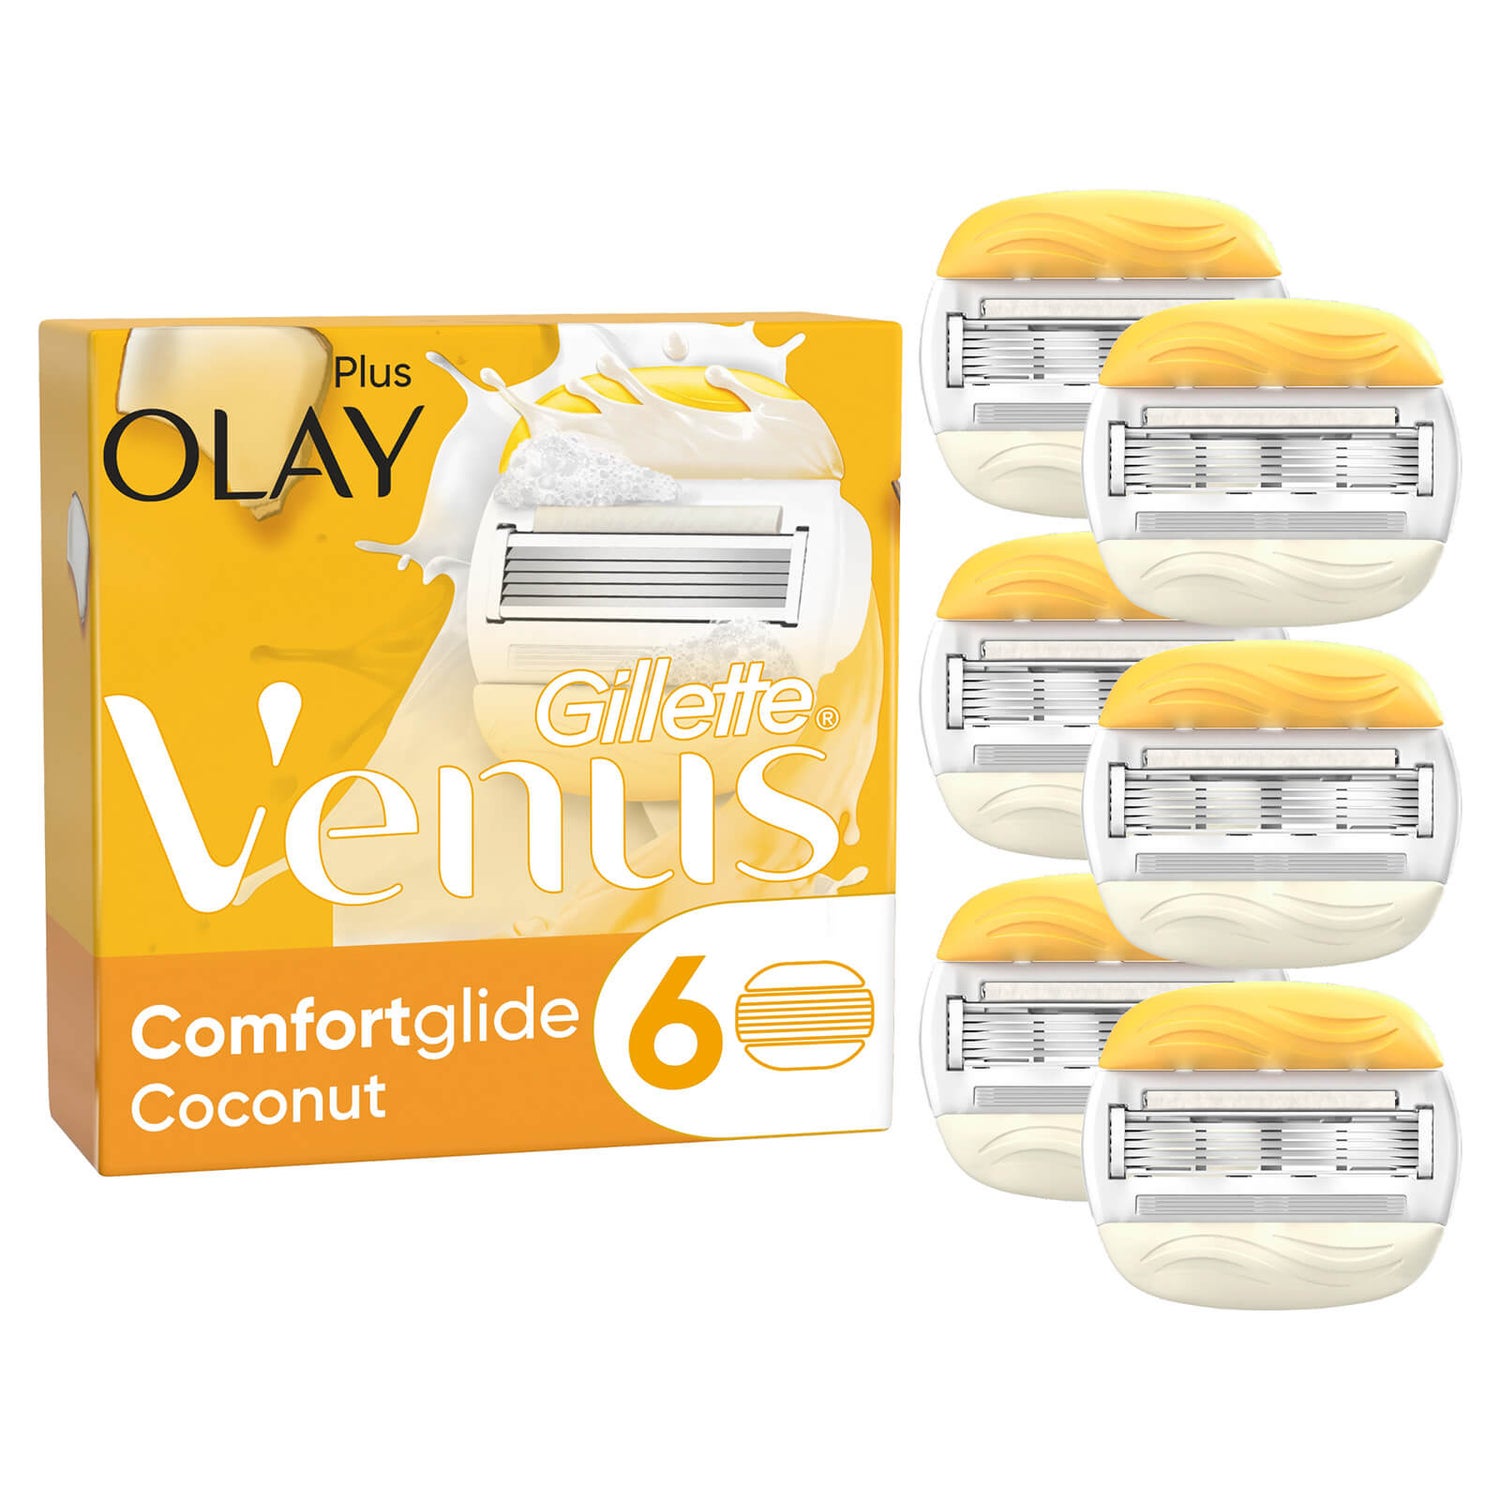 Venus ComfortGlide Coconut With Olay Blades